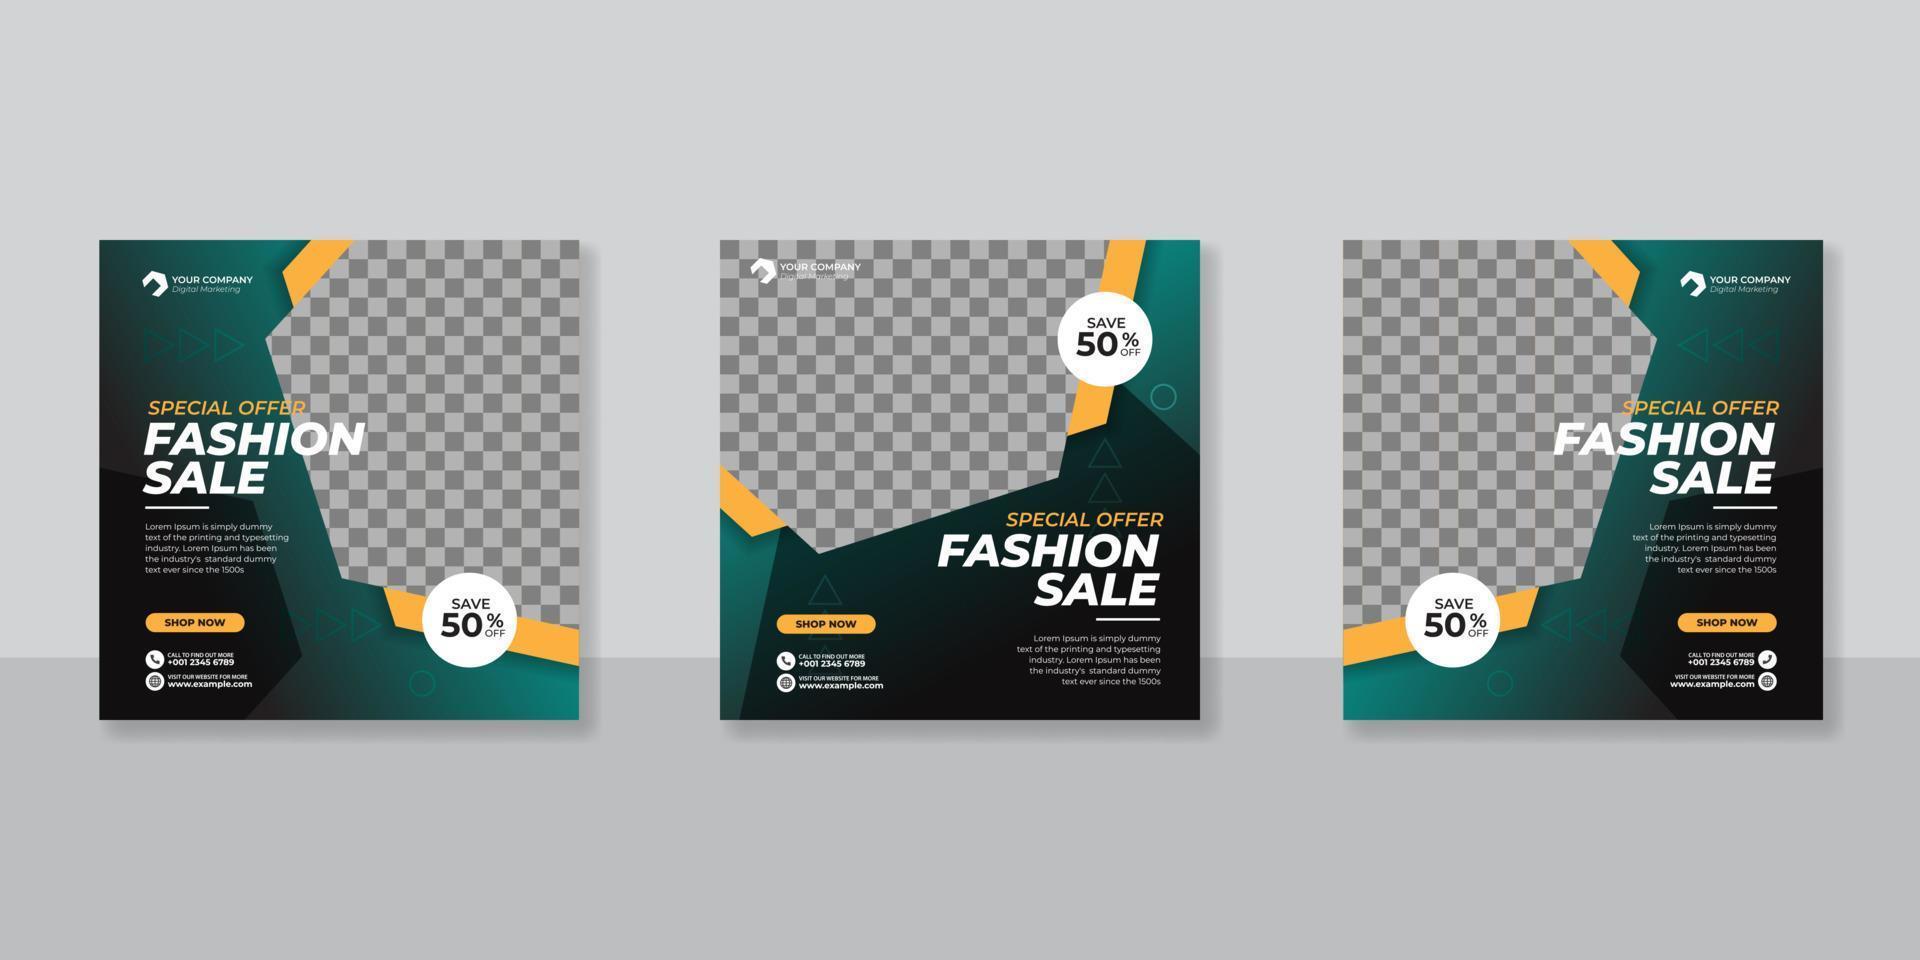 Fashion sale promotion social media square post templates design vector